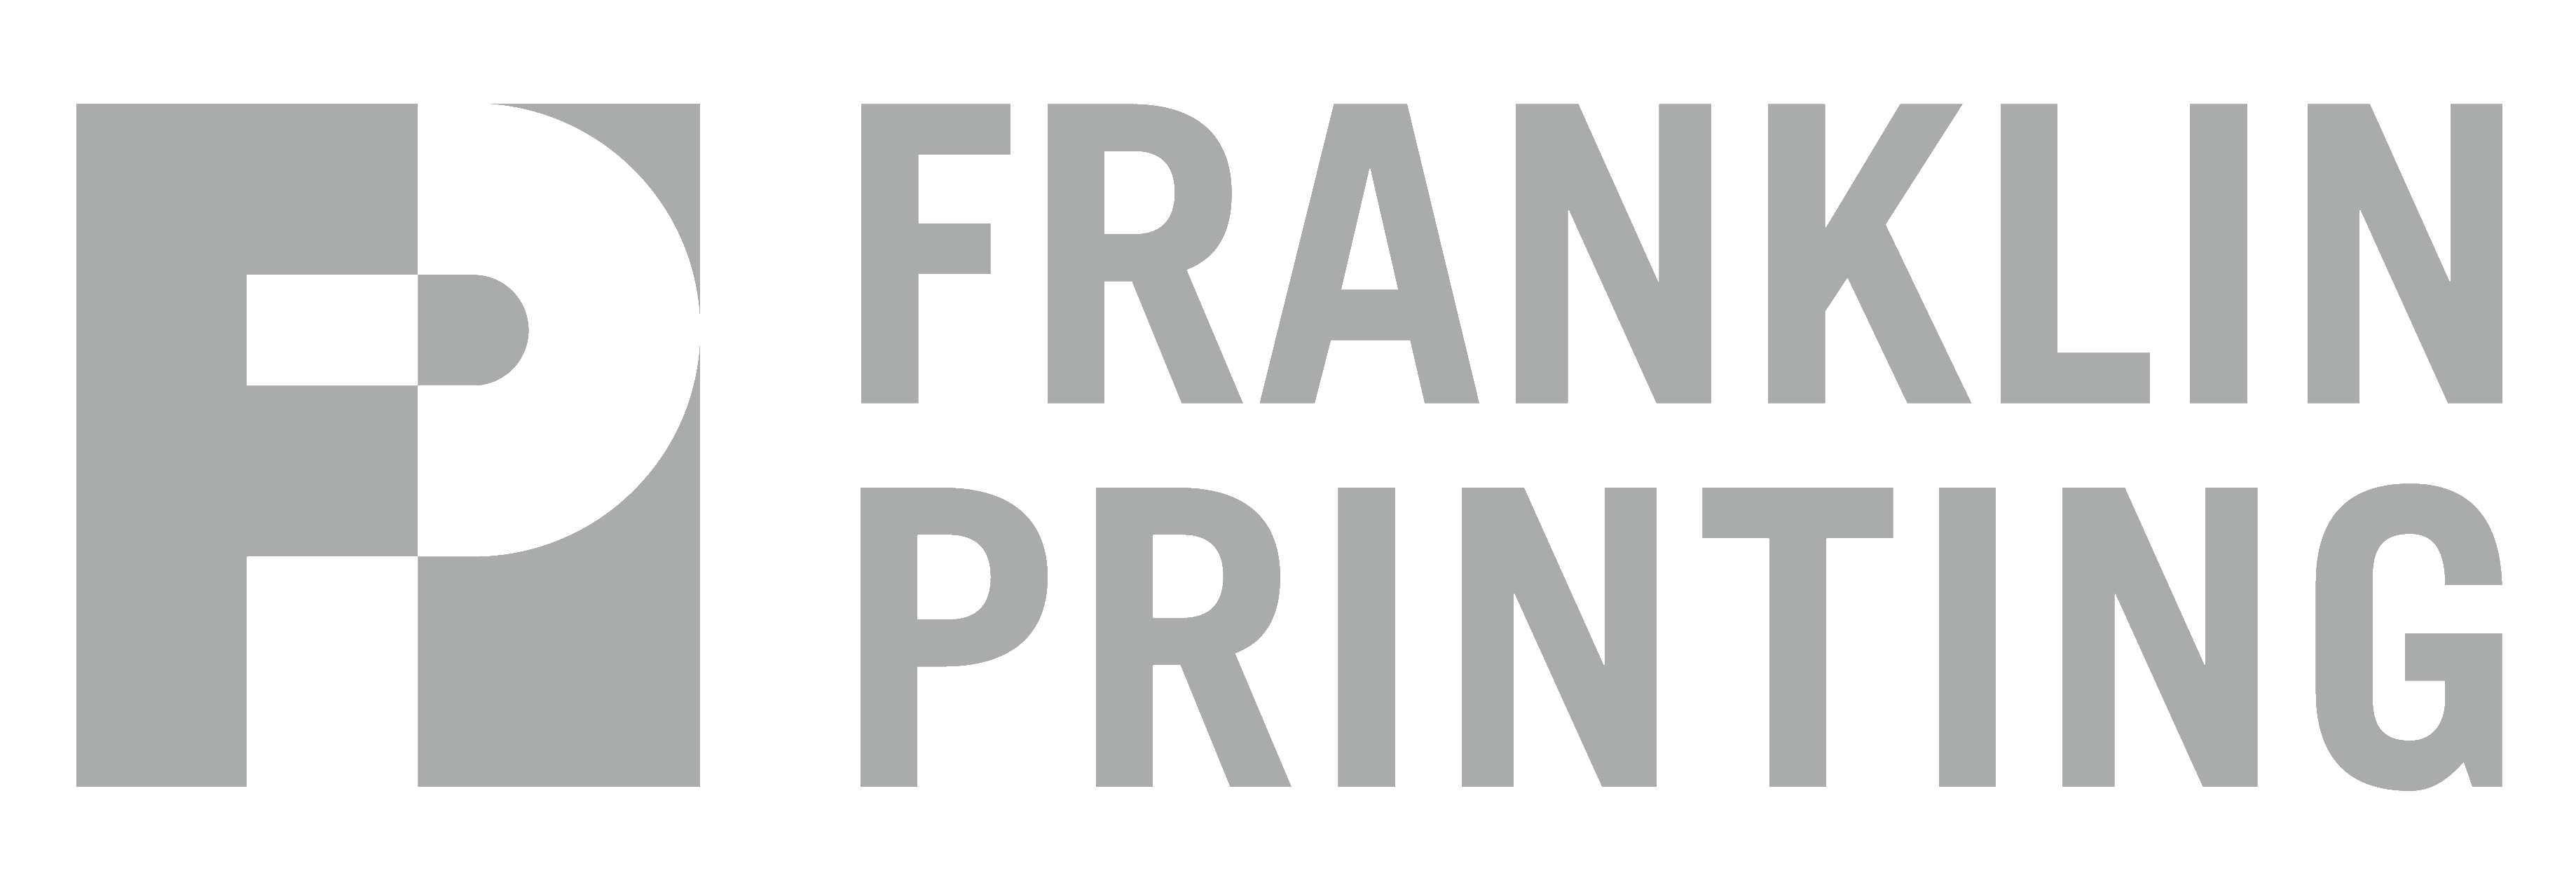 Franklin Printing Logo Grey